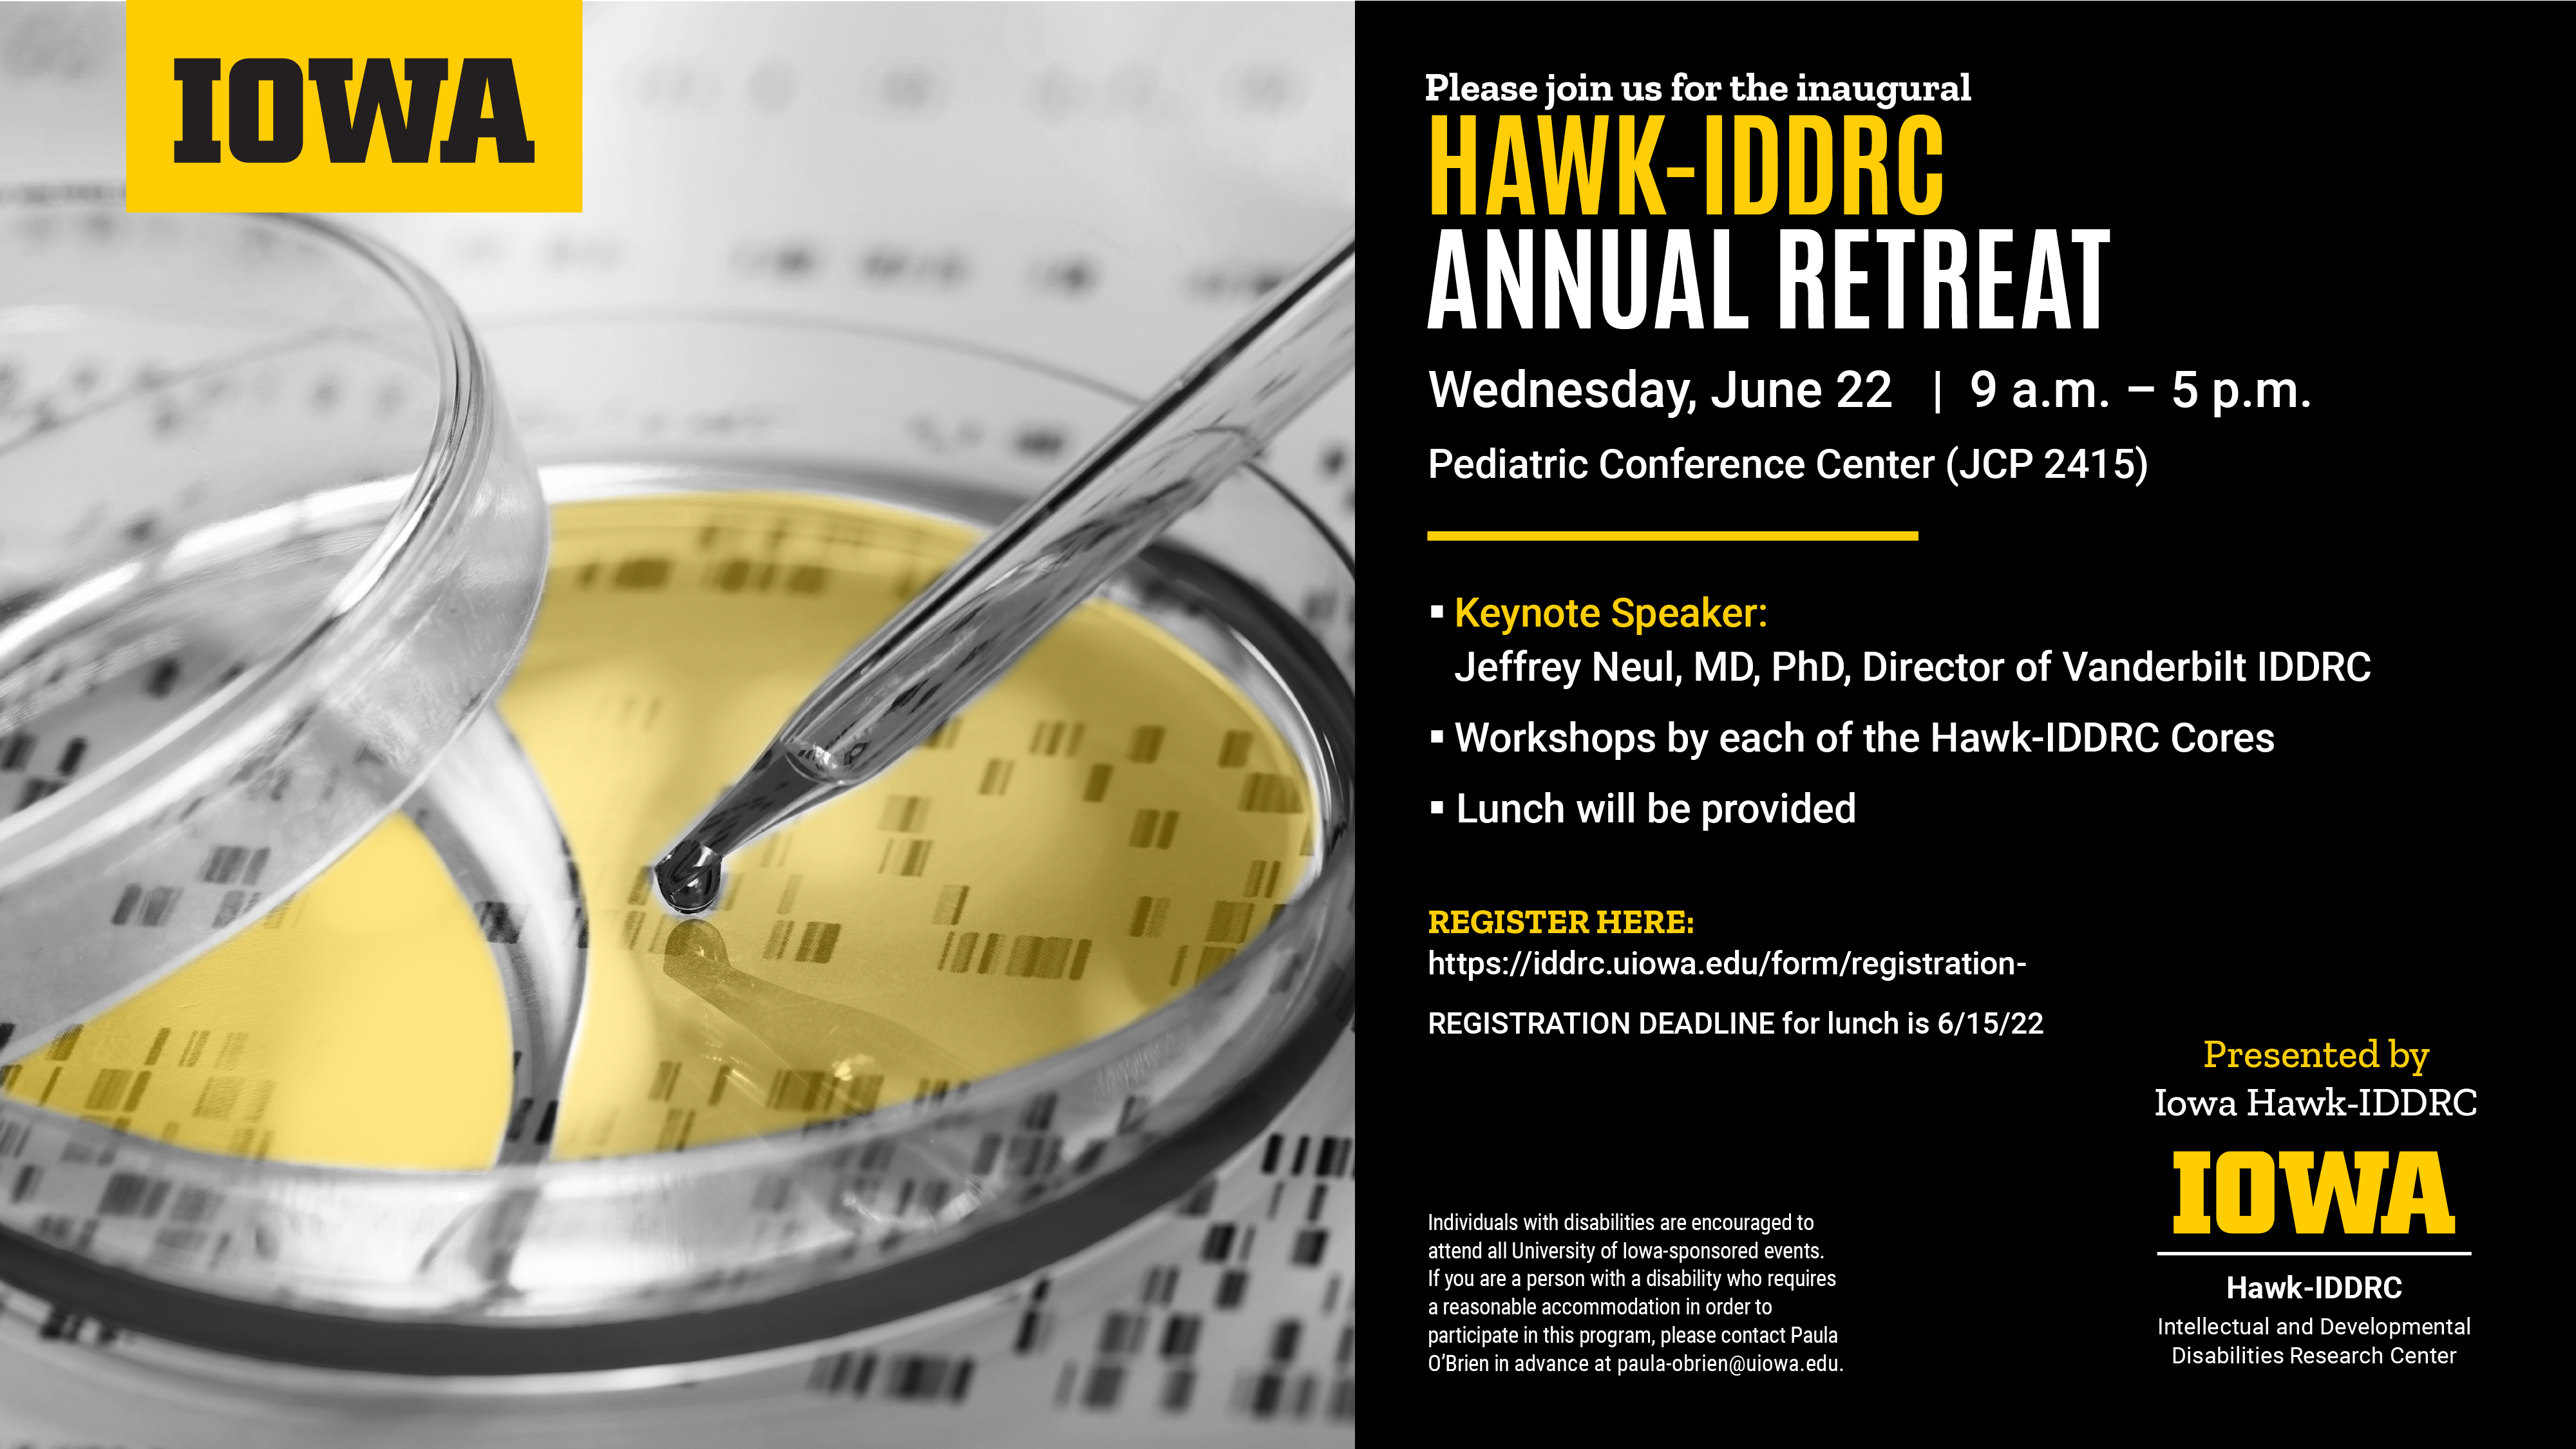 Hawk-IDDRC Annual Retreat June 22nd  promotional image